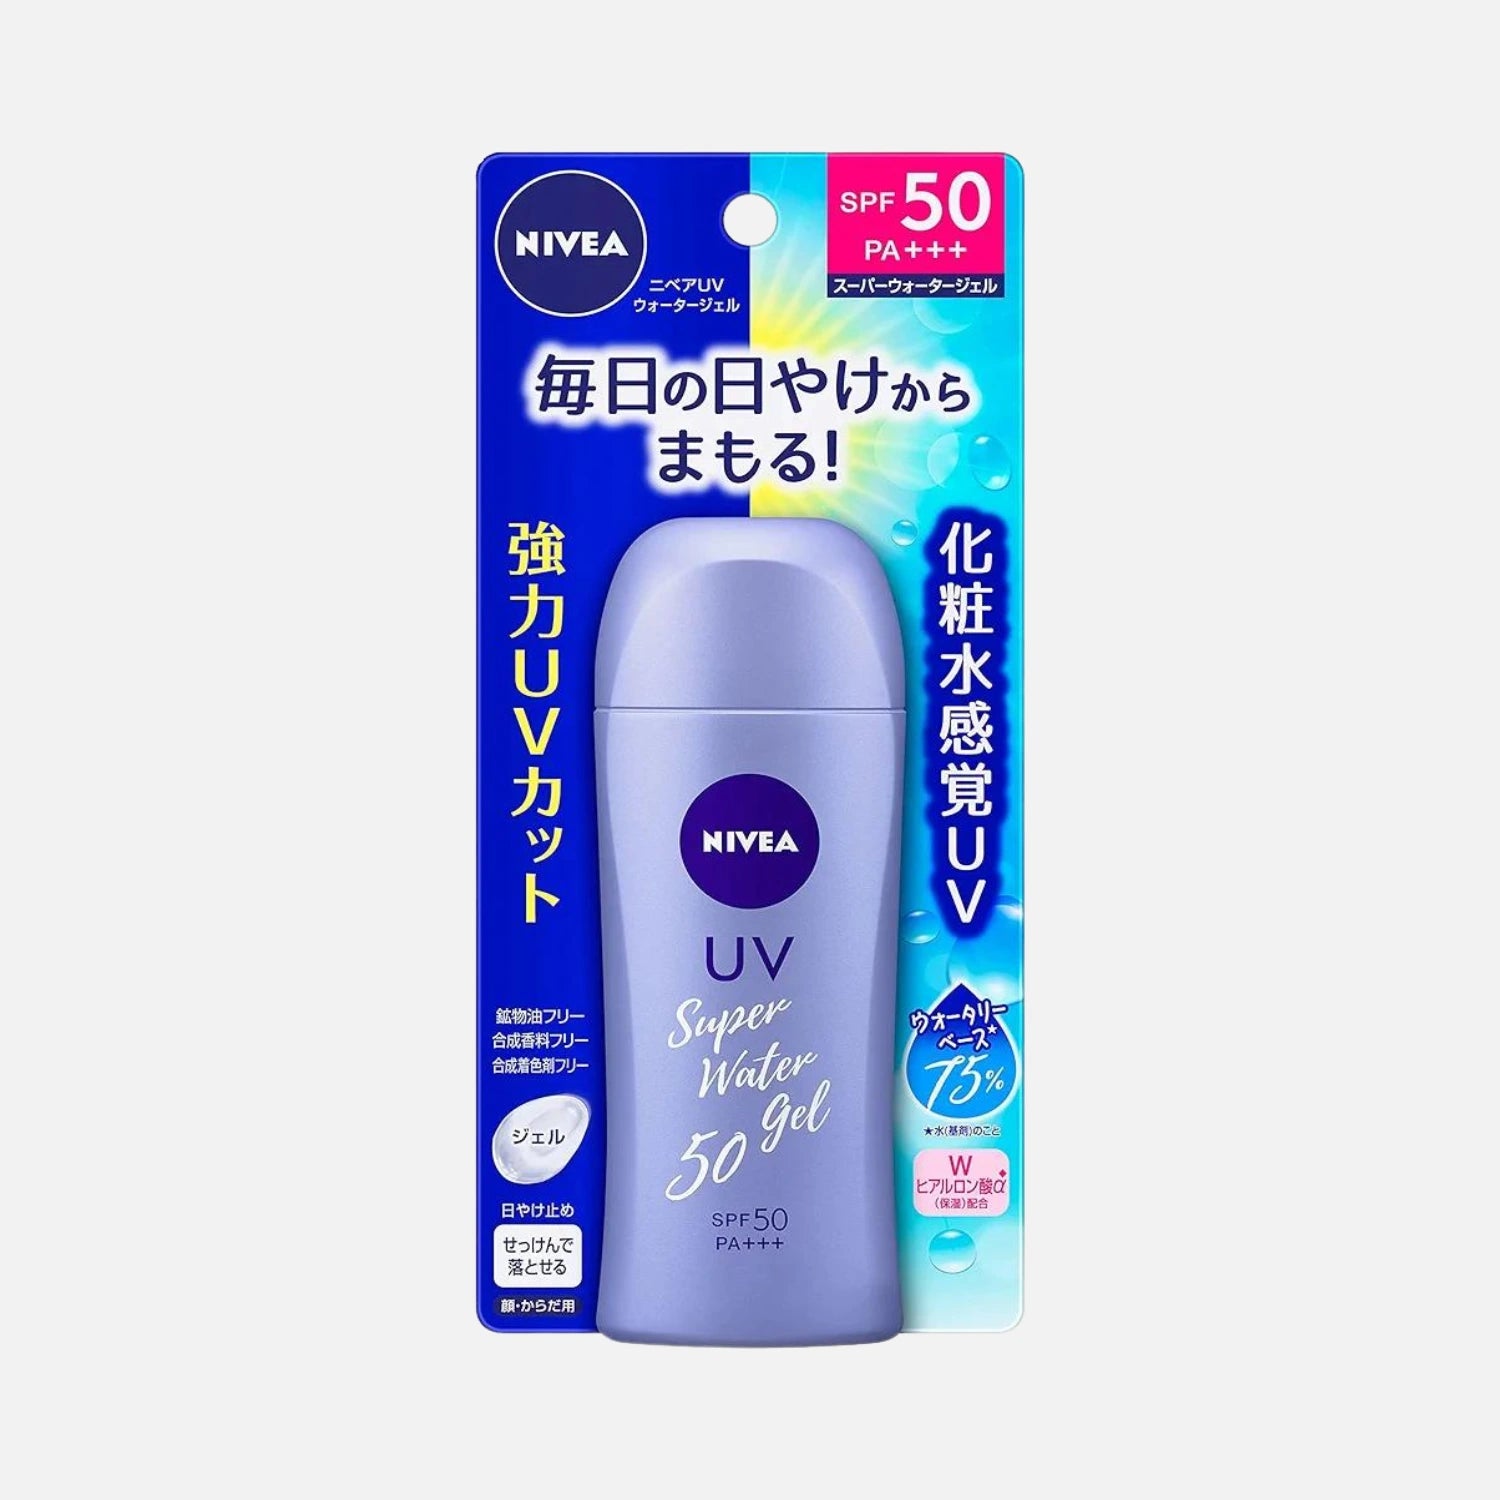 Nivea Japan Super Water Gel SPF 50 PA+++ 80g - Buy Me Japan